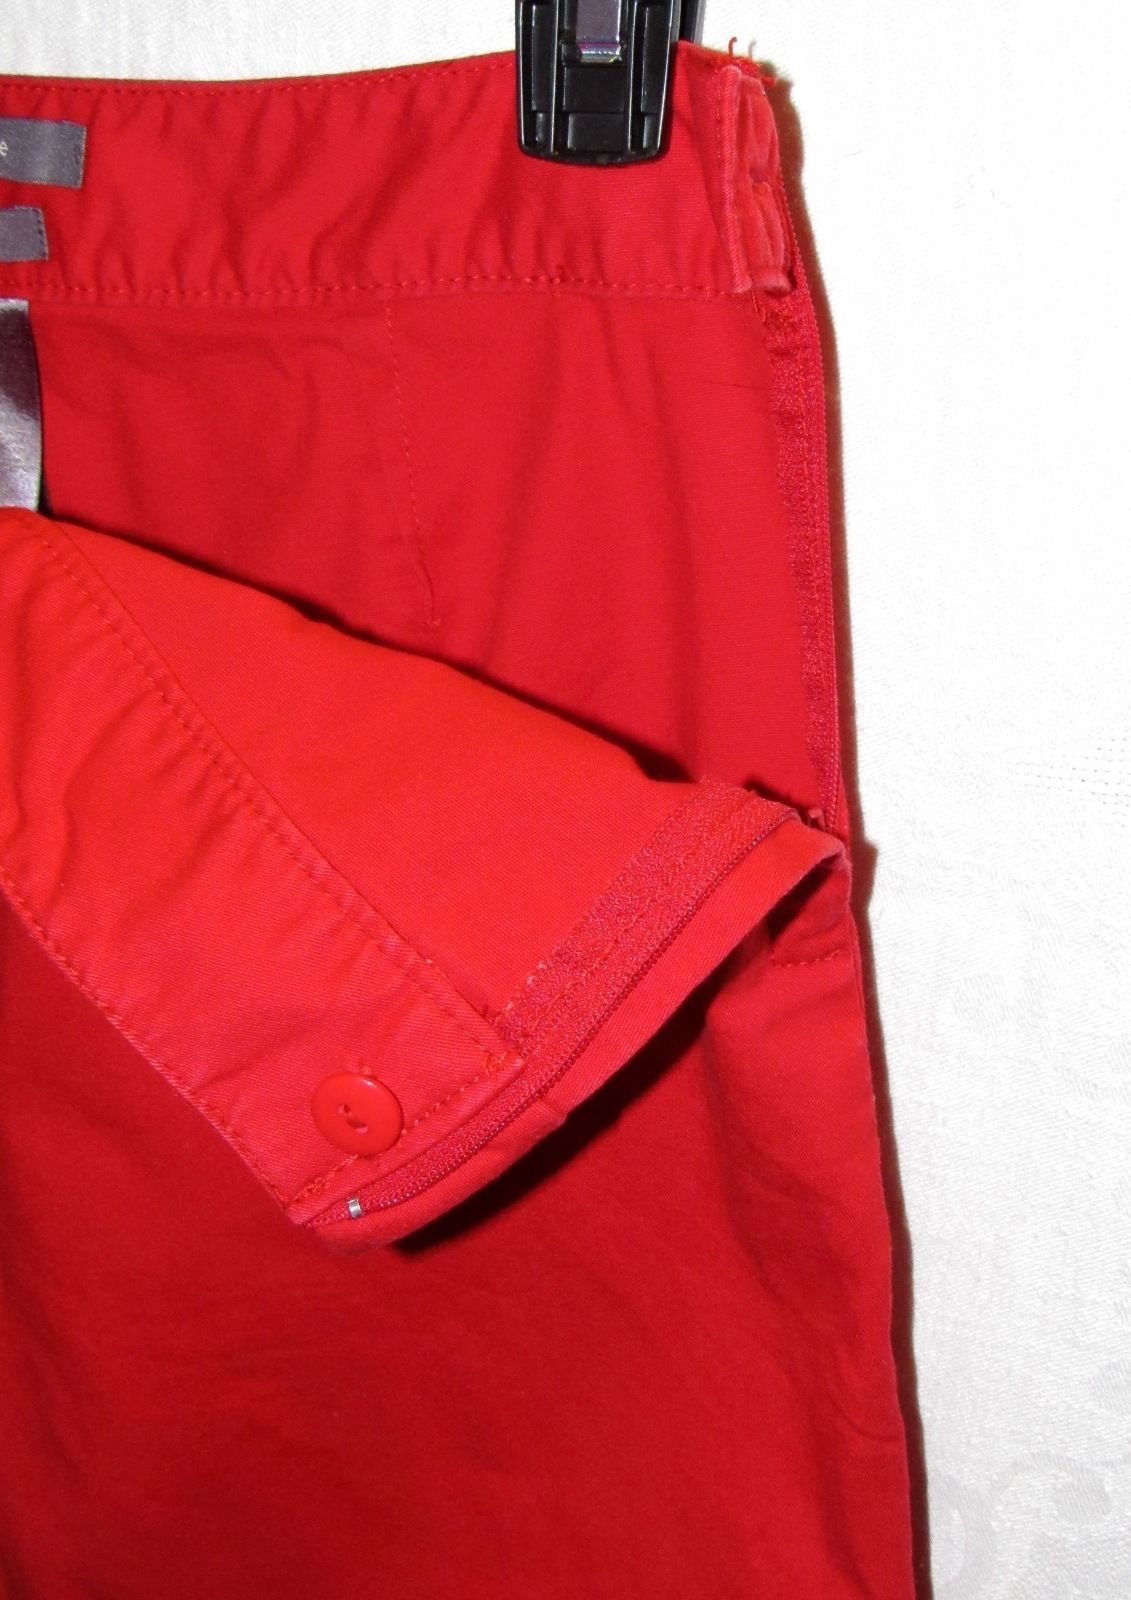 Liz Claiborne Red Audra Capri/Cropped Cotton/Spandex Pants Inseam 22 ...